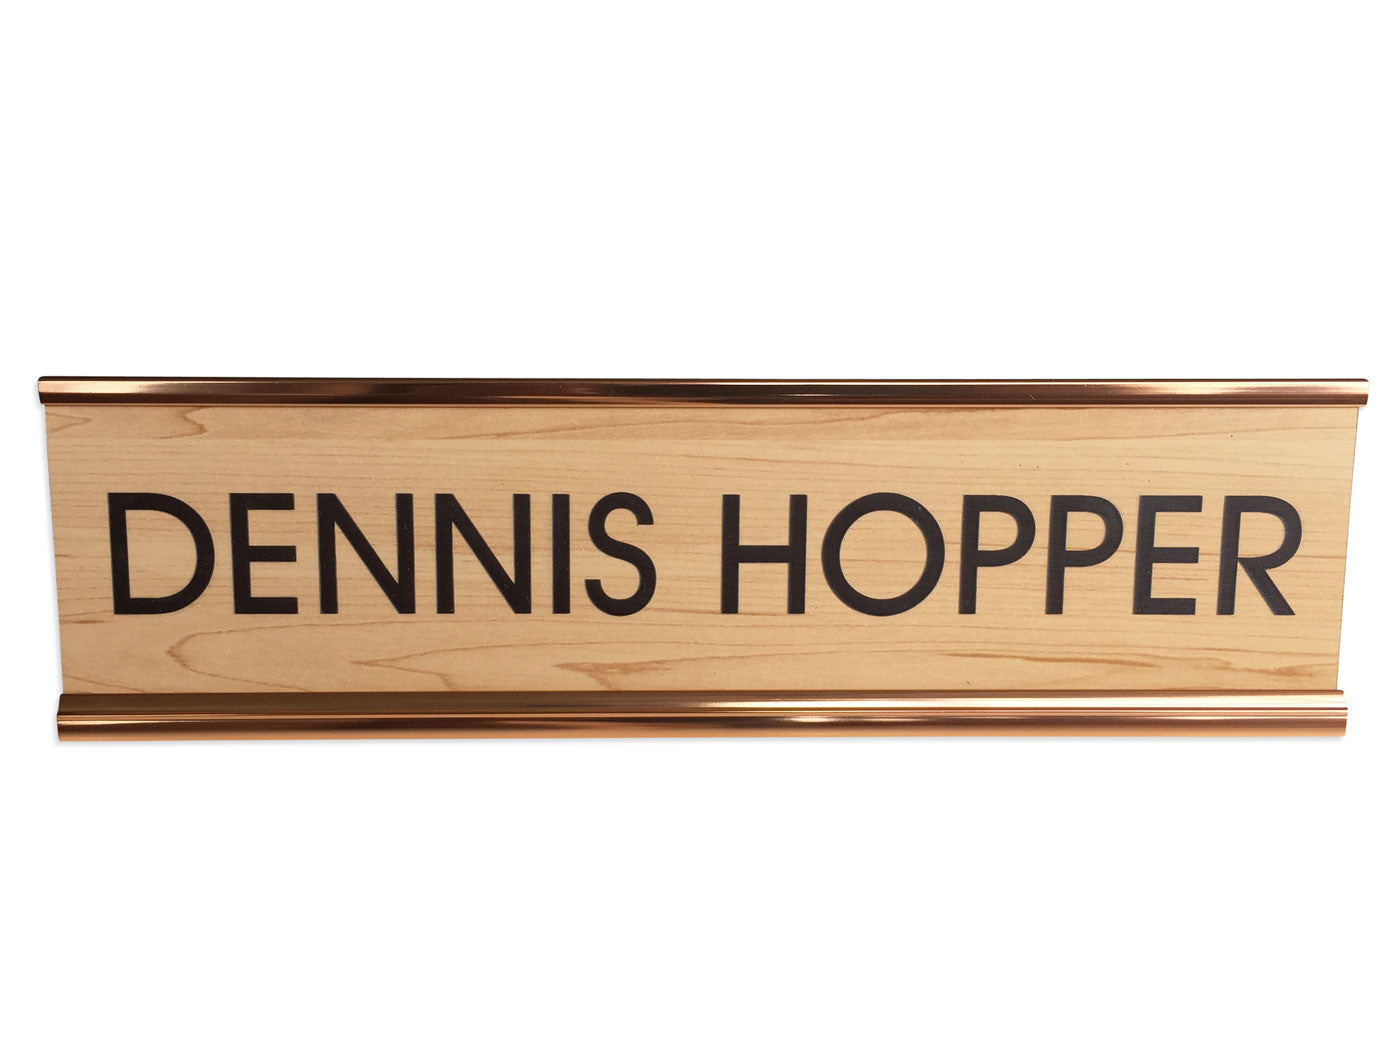 Dennis Hopper Engraved Plaque Actor S Desk Nameplate Well Done